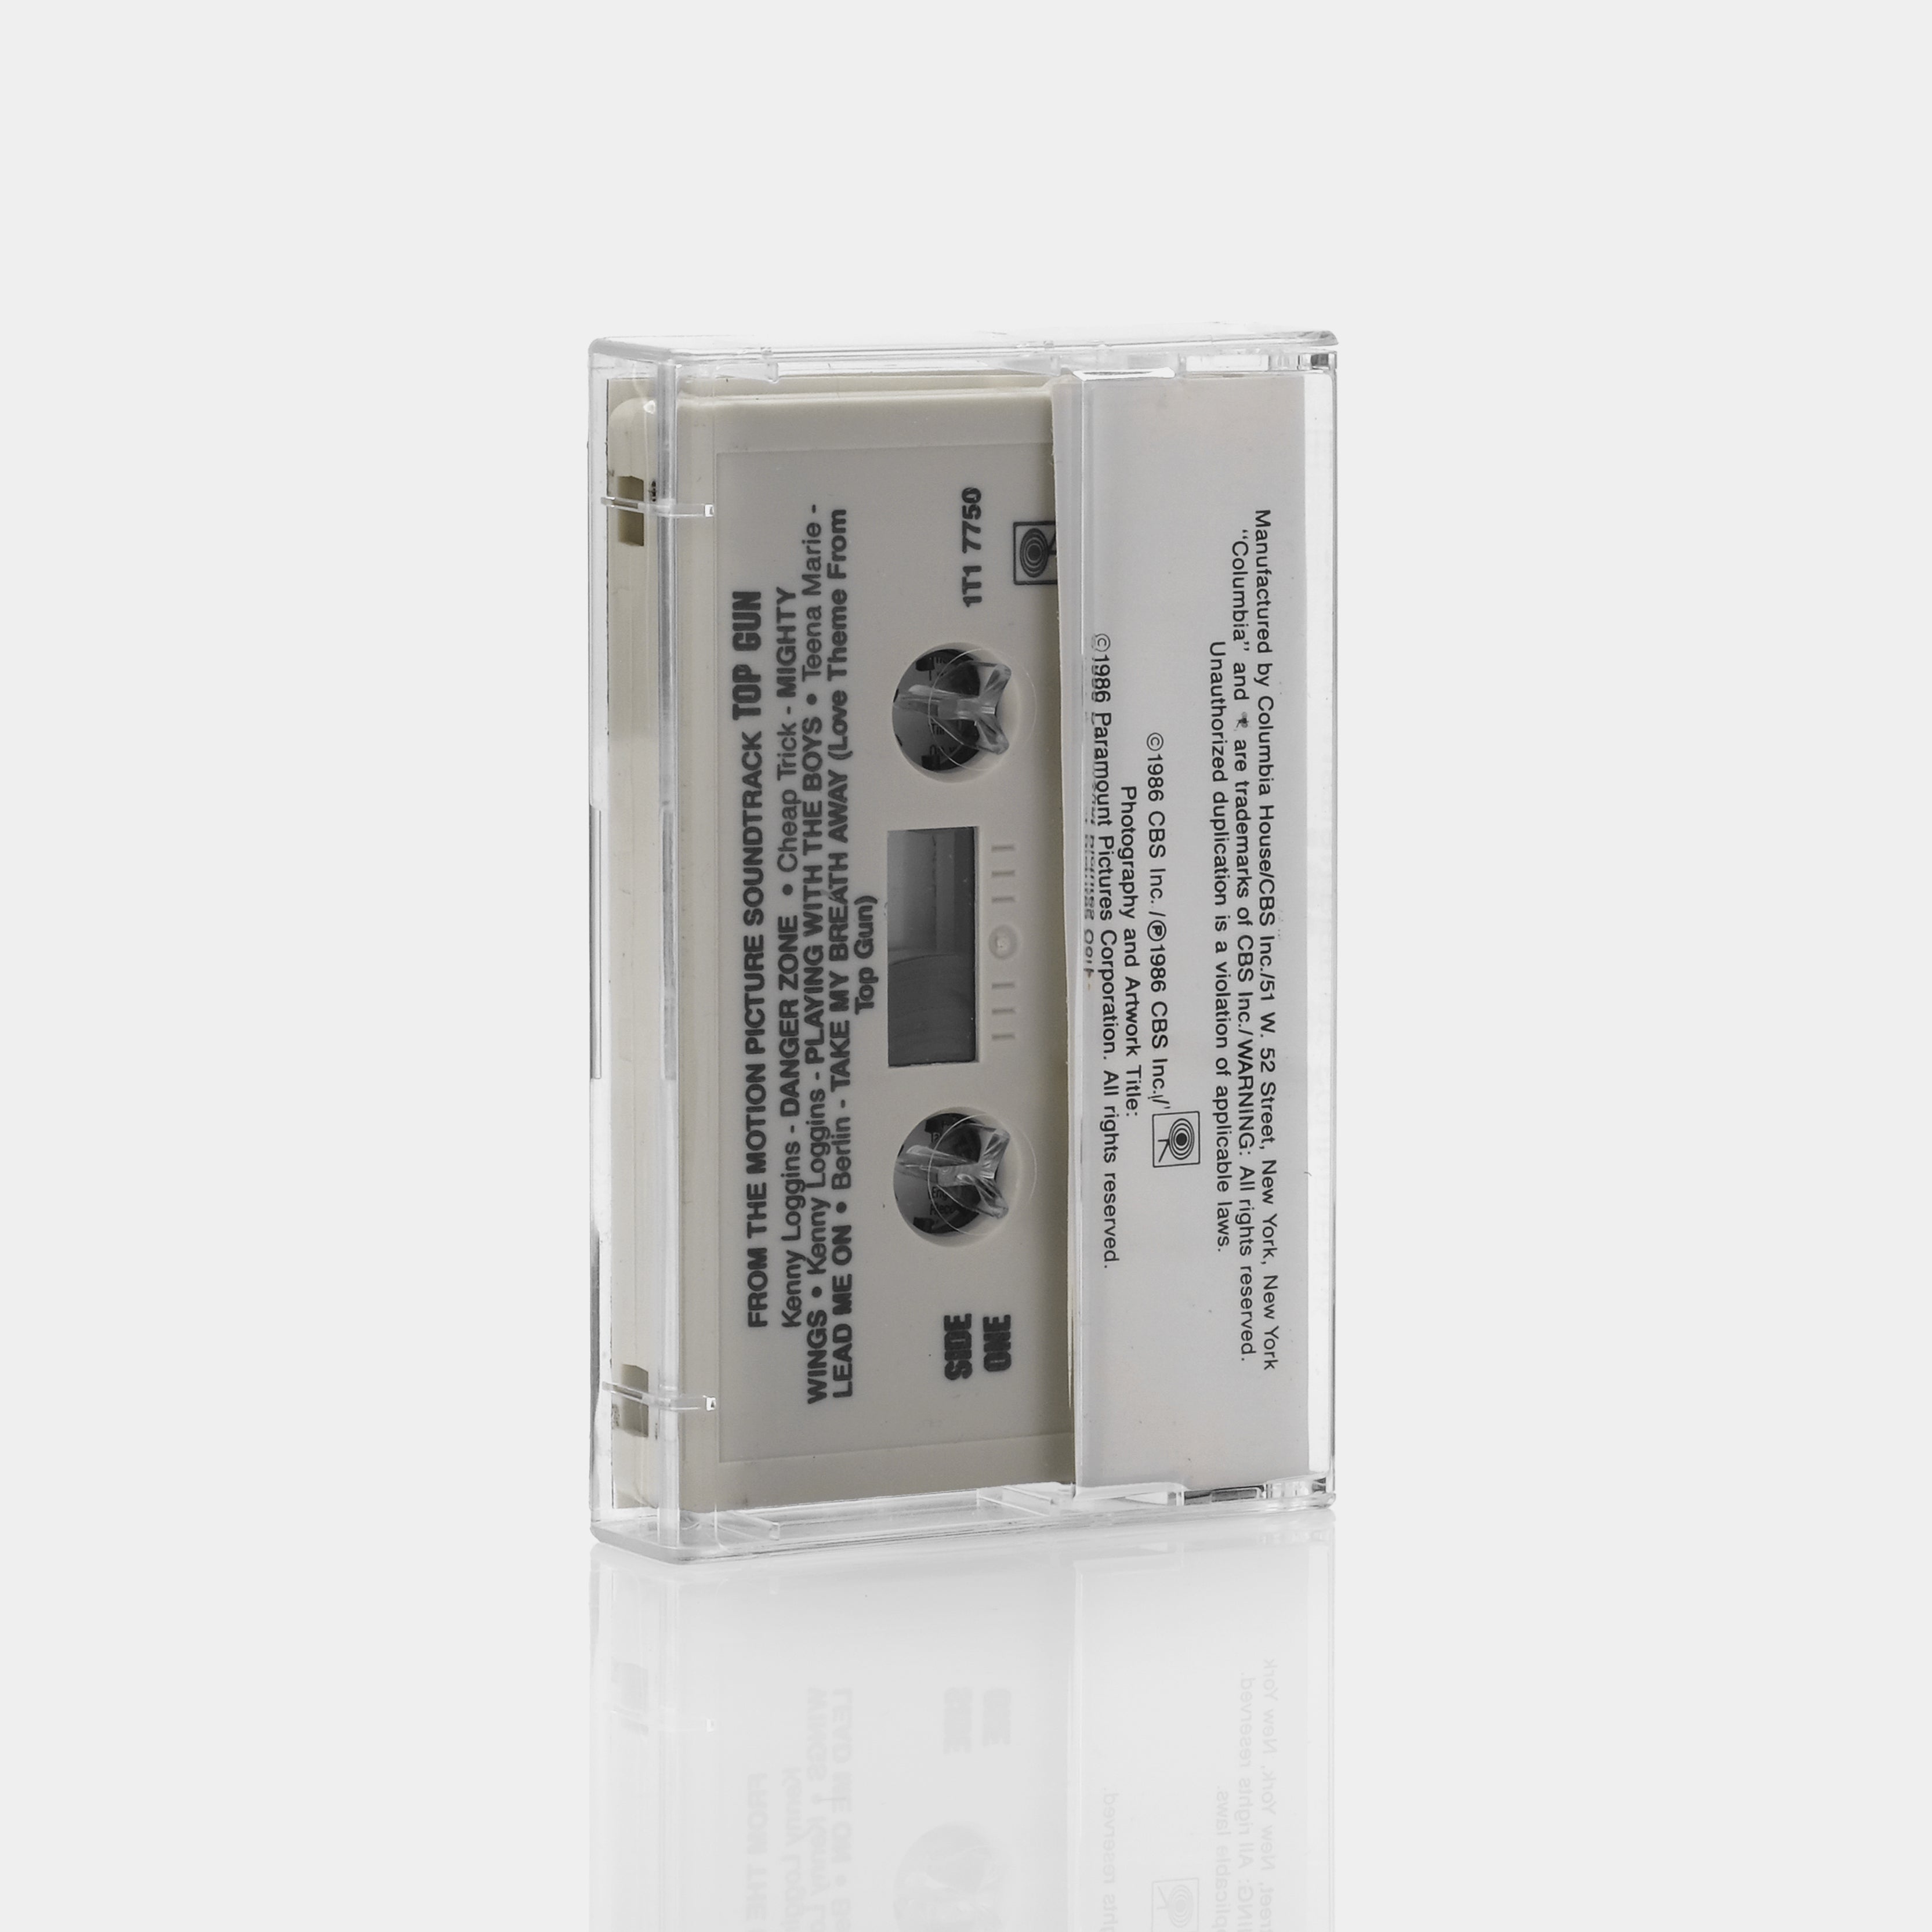 Top Gun (Original Motion Picture Soundtrack) Cassette Tape